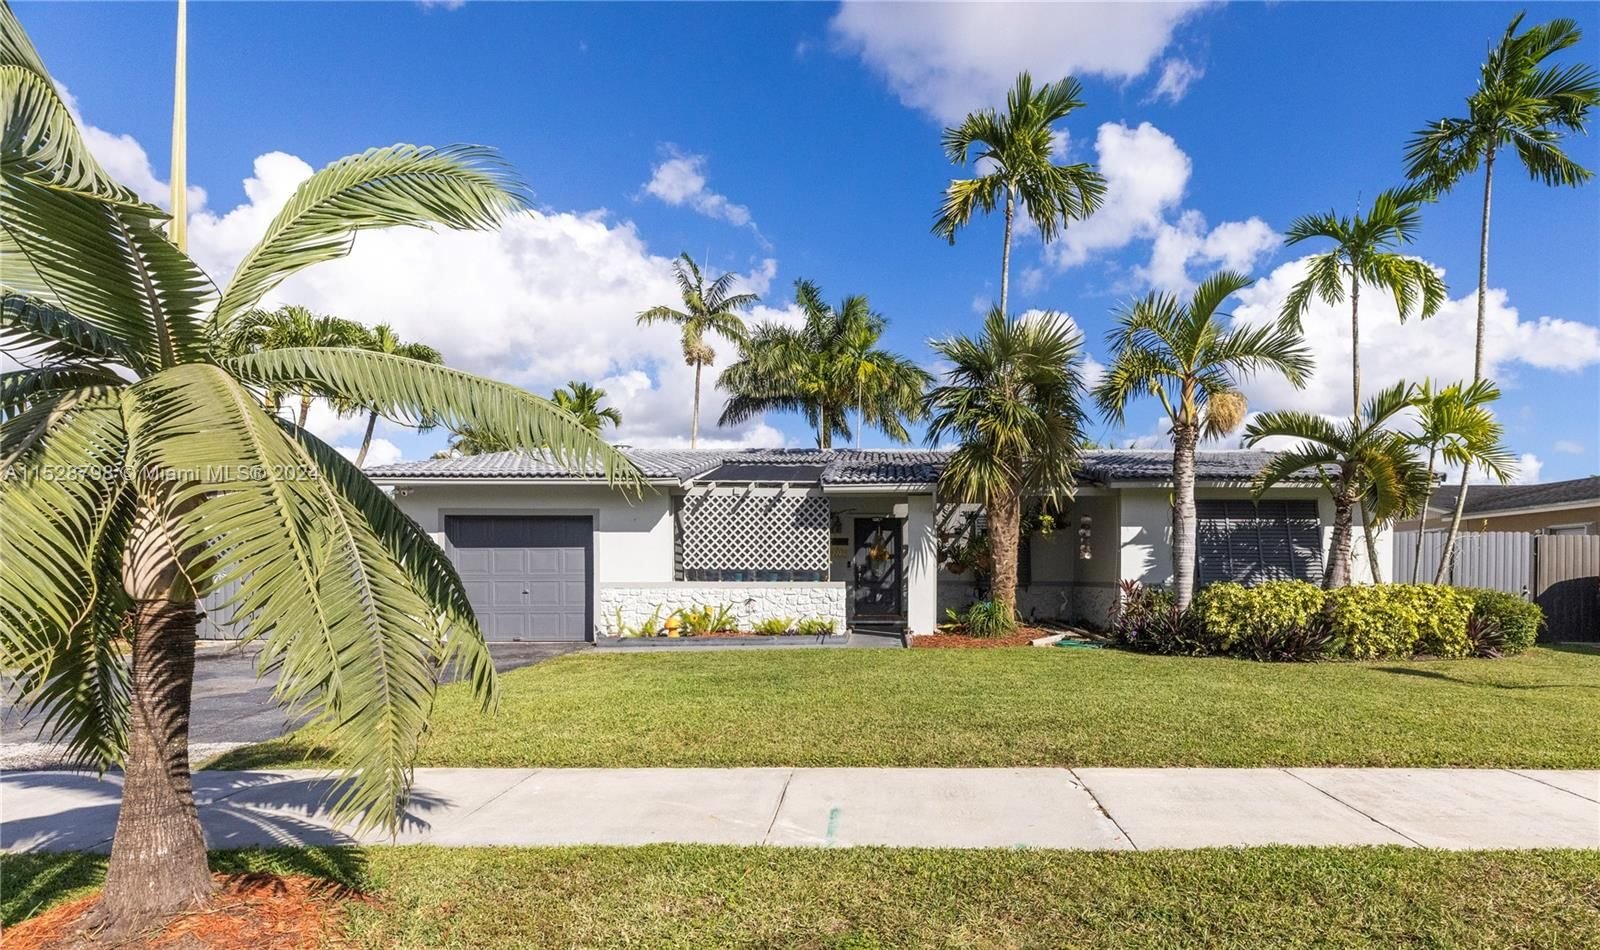 Real estate property located at 7223 134th Pl, Miami-Dade County, WINSTON PARK UNIT 6, Miami, FL